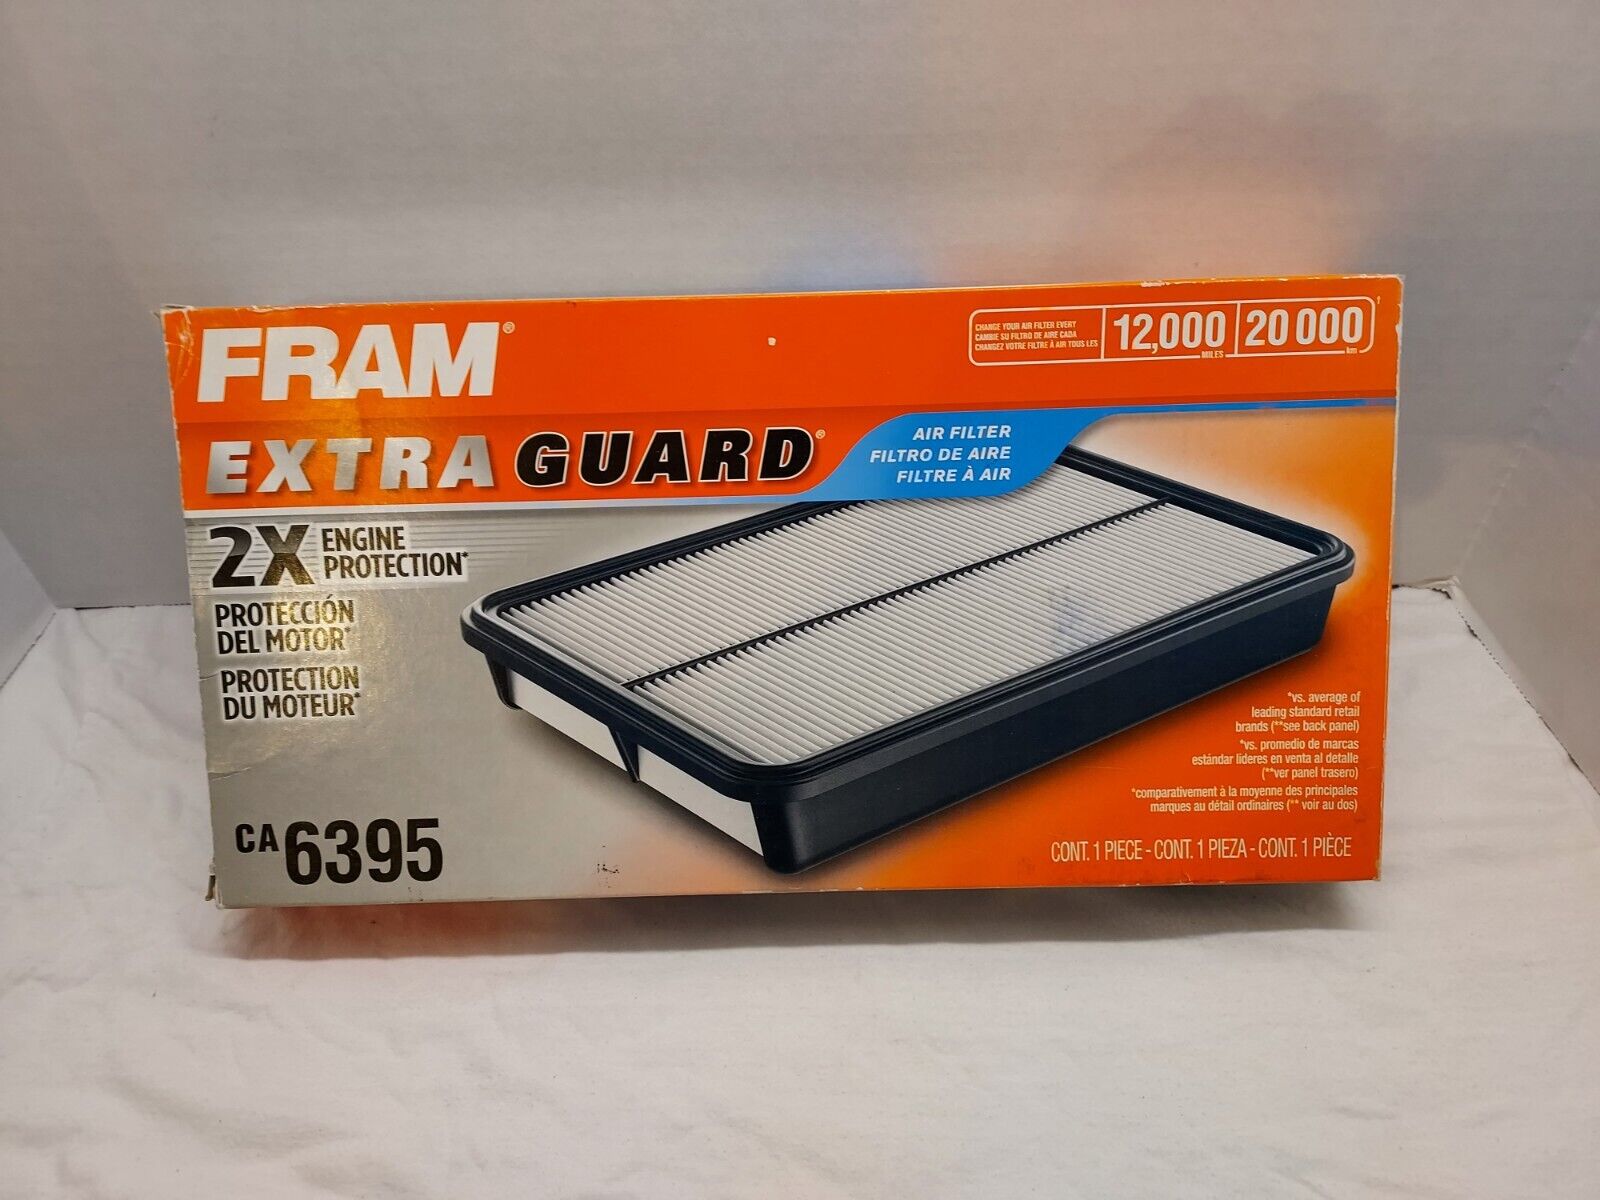 Fram Auto Air Filter CA6395 Extra Guard New